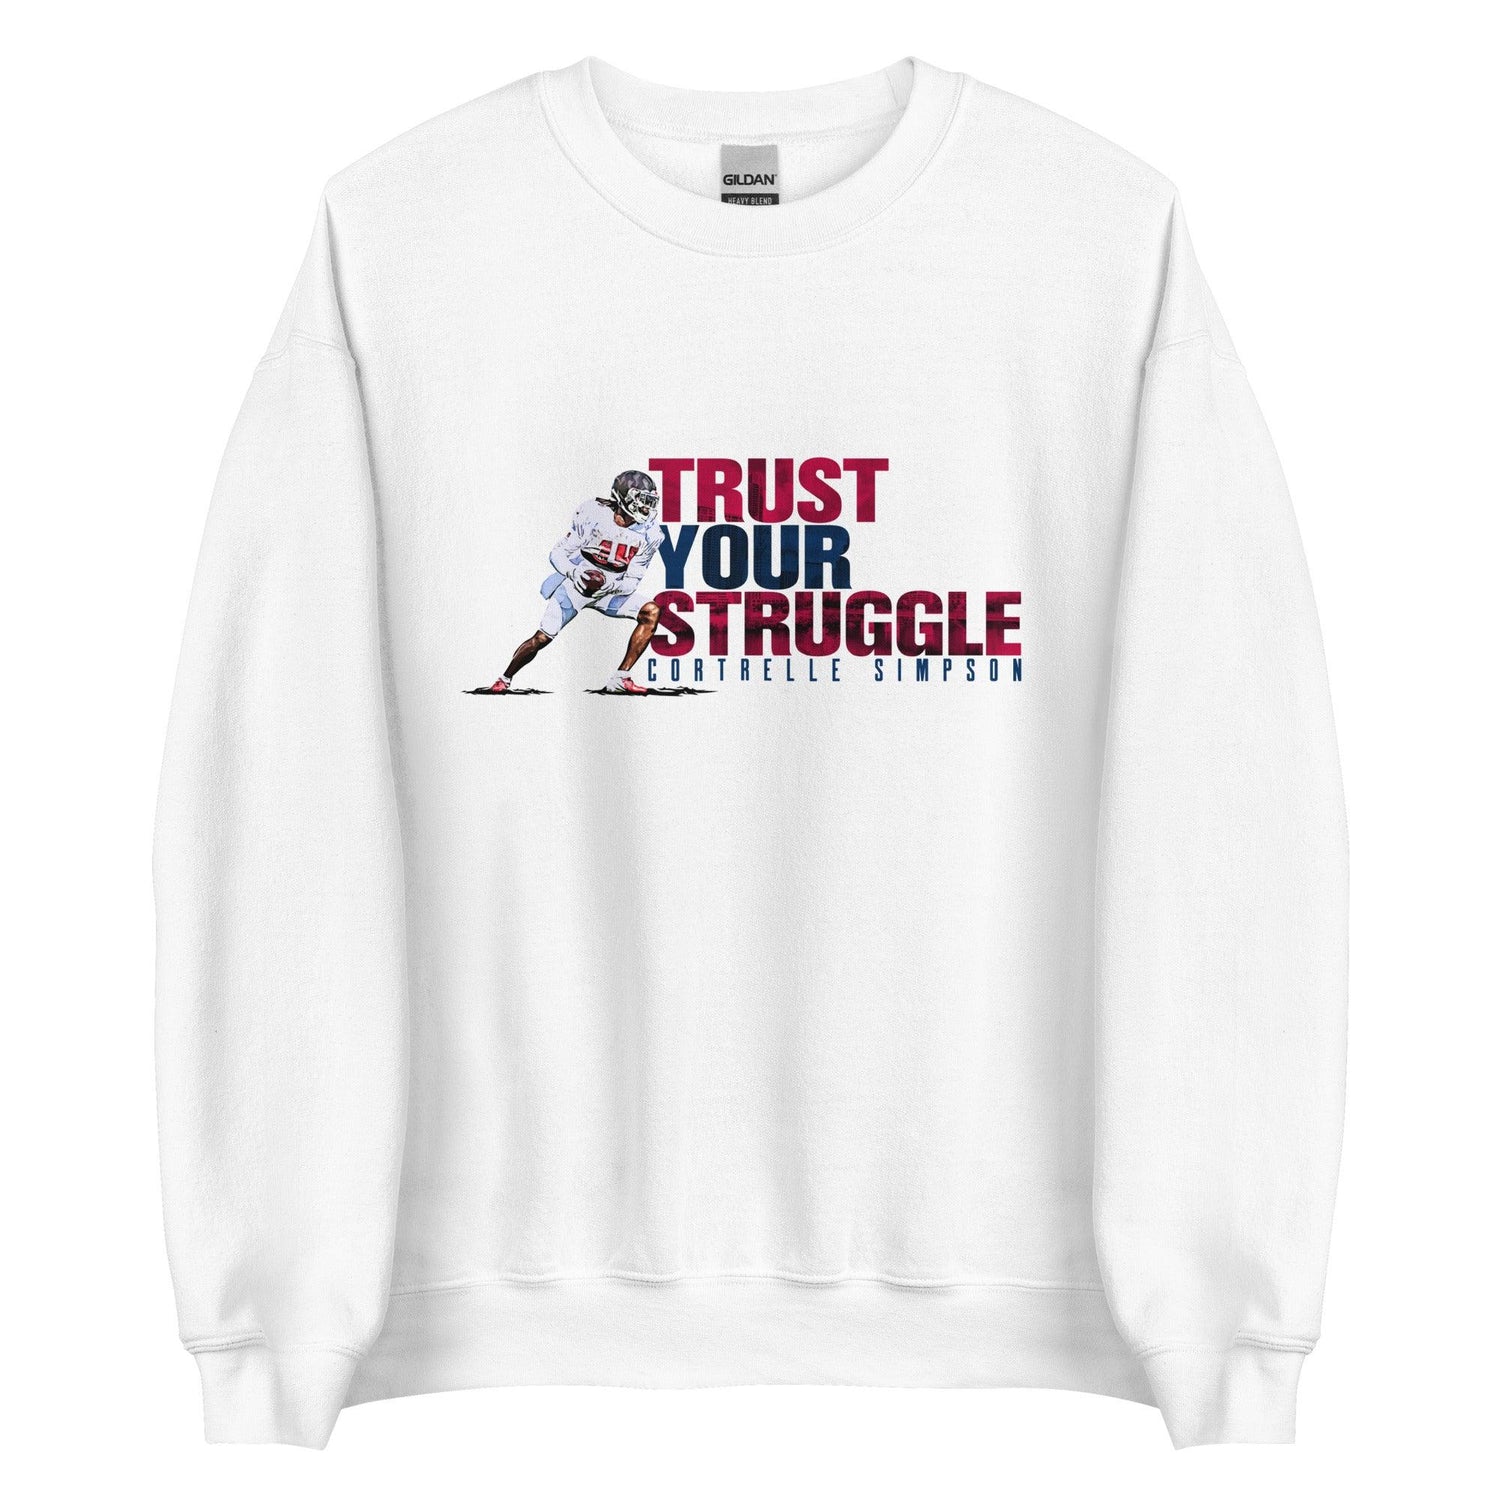 Cortrelle Simpson "Trust Your Struggle" Sweatshirt - Fan Arch